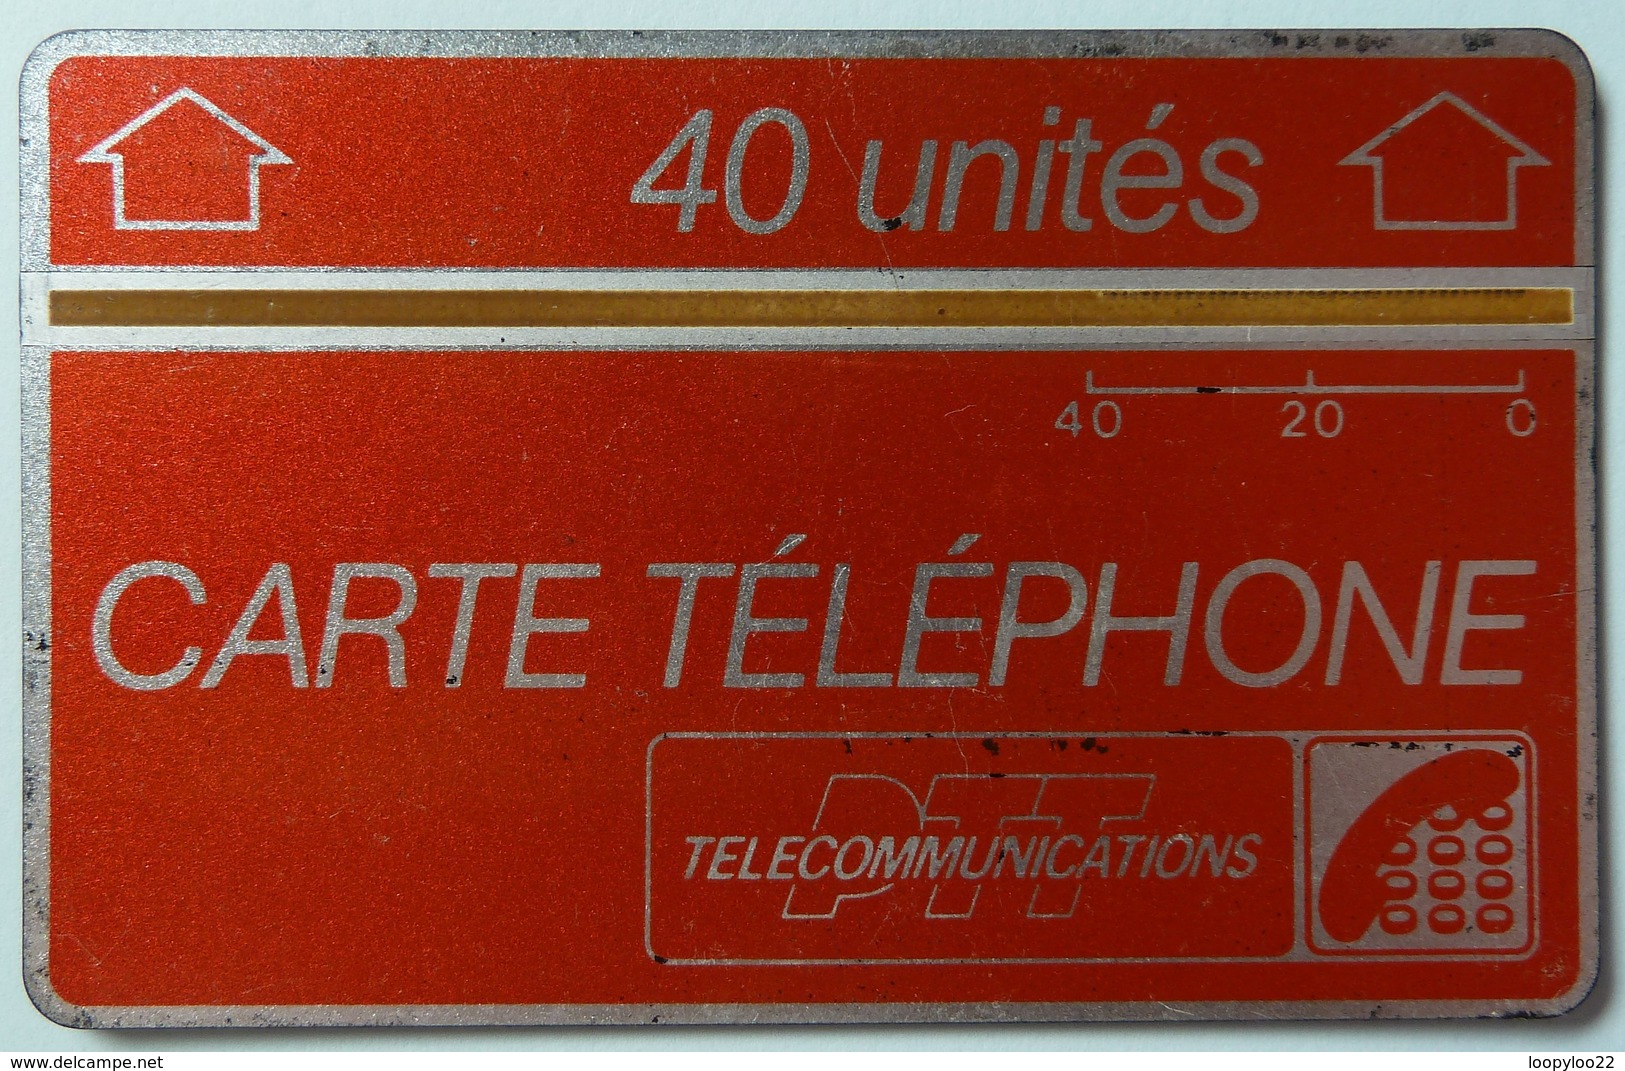 FRANCE - L&G - Landis & Gyr - 40 Units - Carte Telephone PTT - 607F - Used - RRR - Phonecards: Internal Use